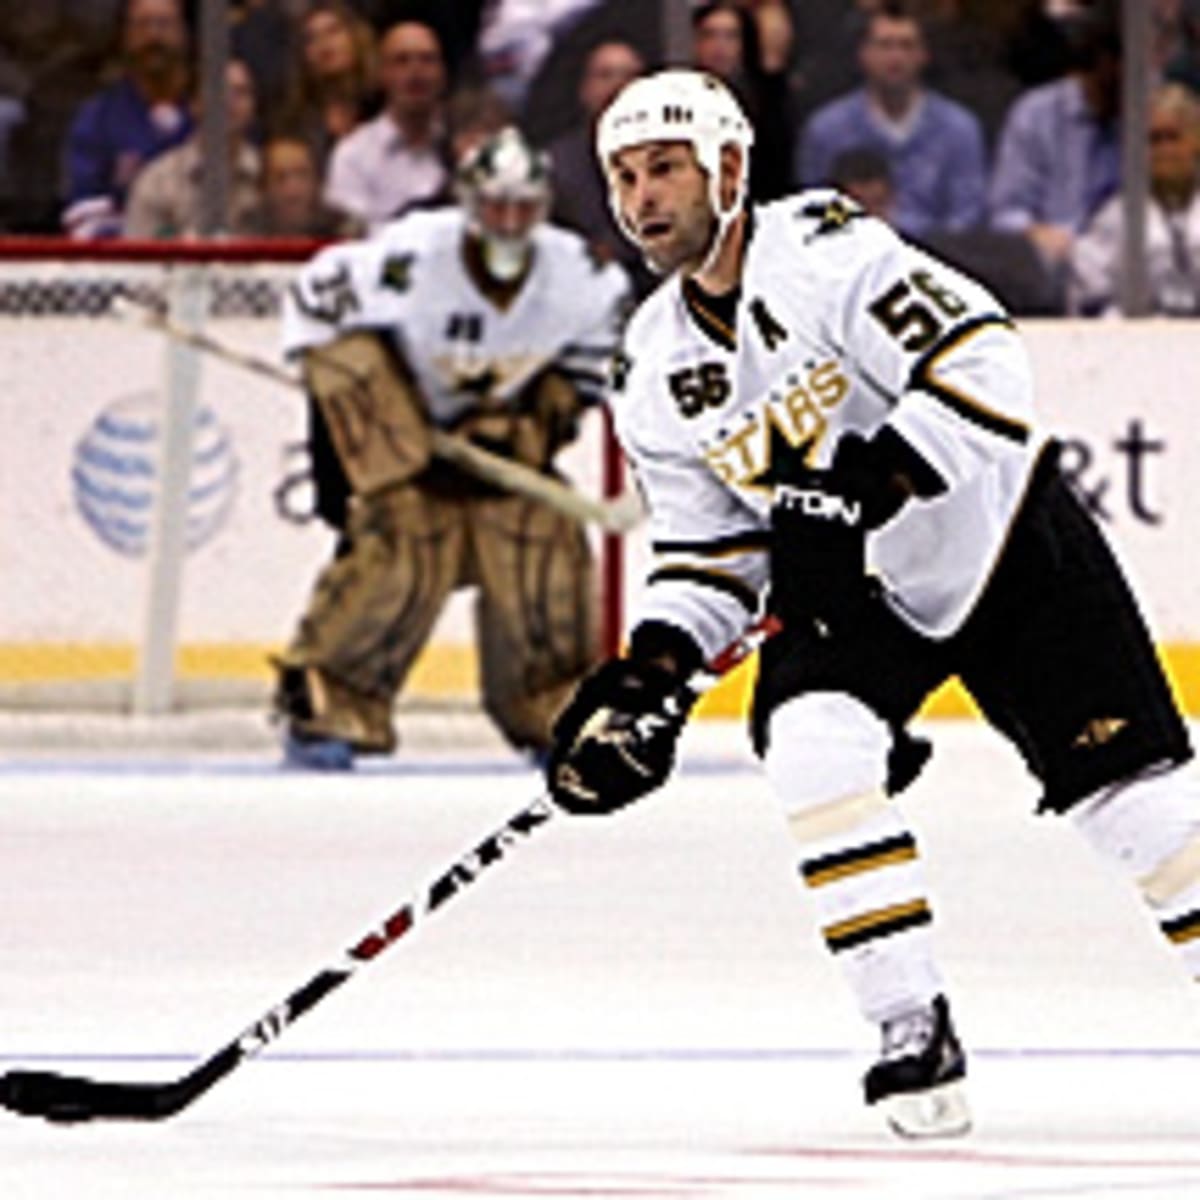 Marty Turco making fast progress for Bruins - The Boston Globe